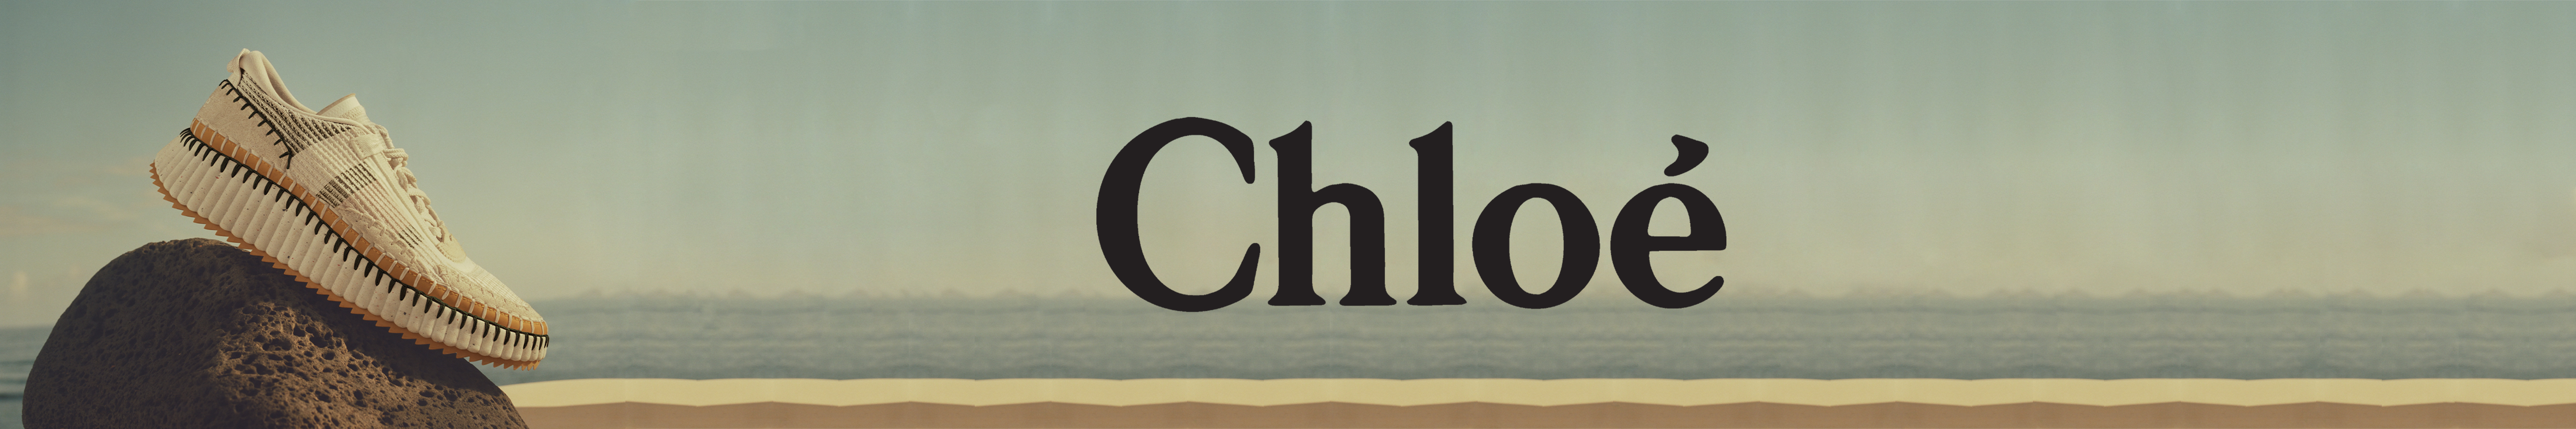 Chloe-banner